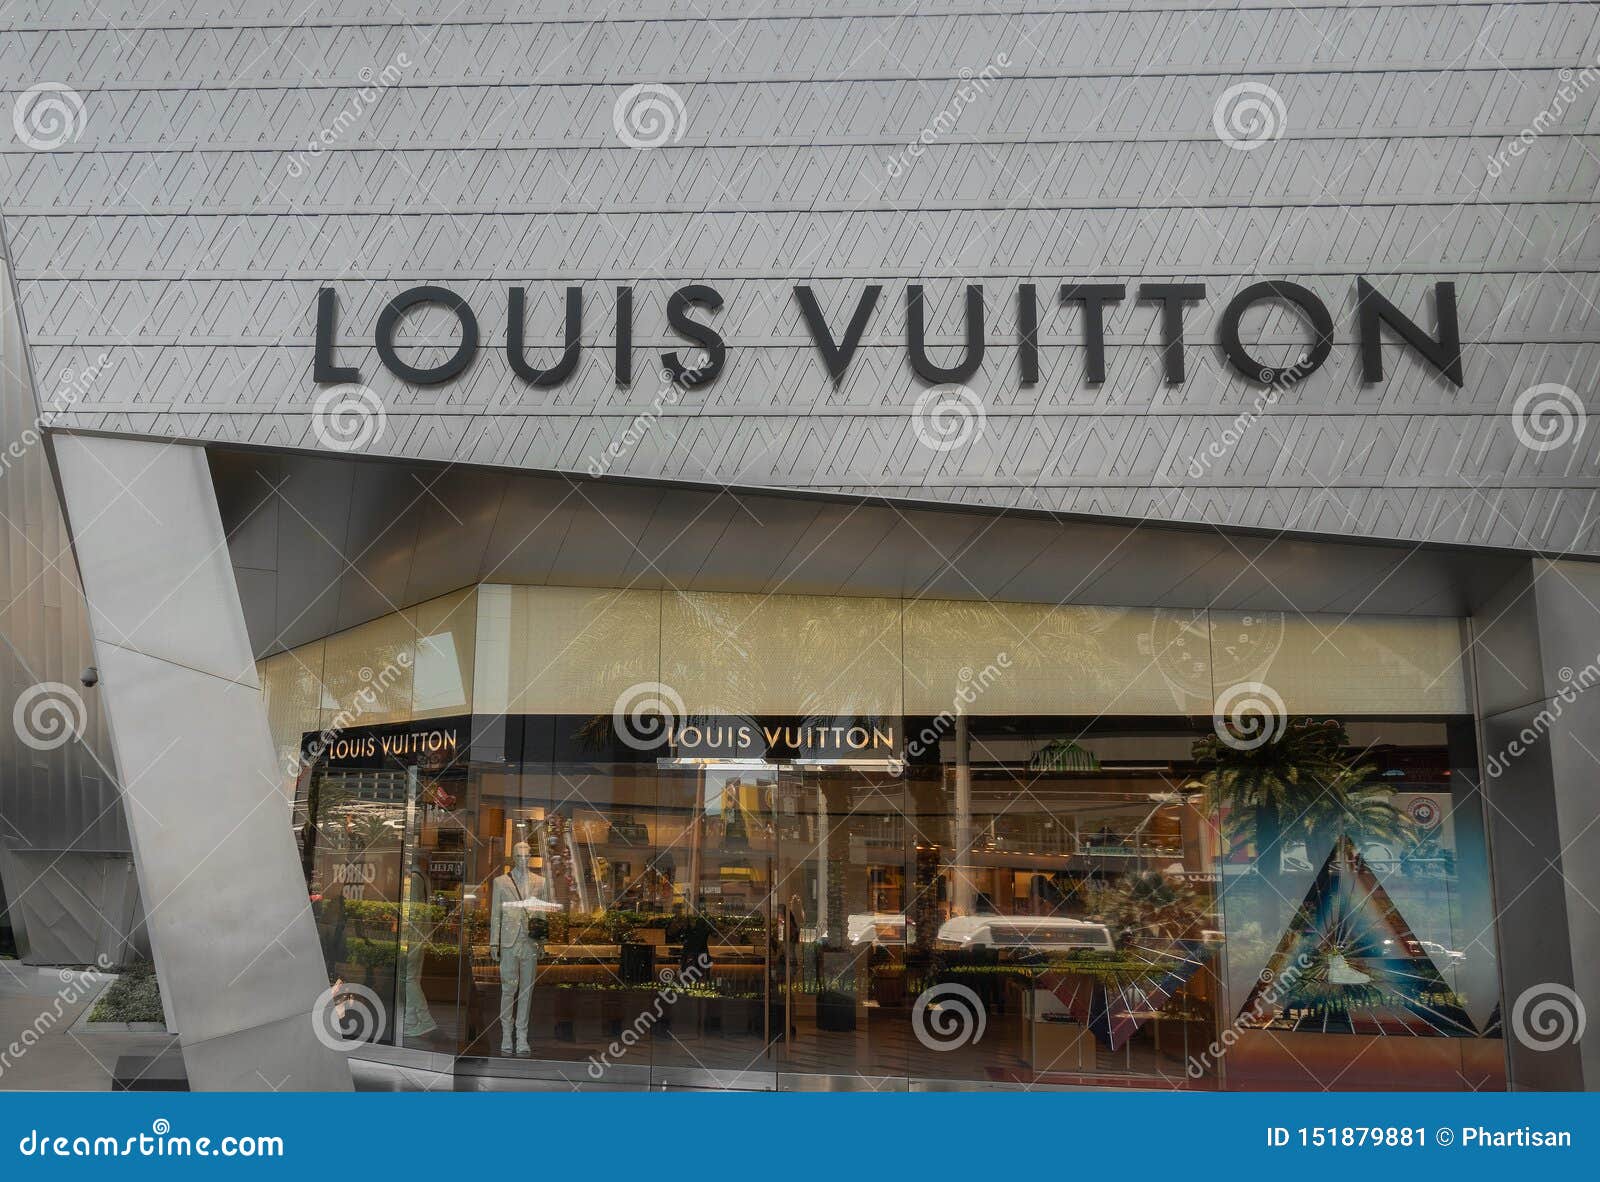 LOUIS VUITTON LAS VEGAS CAESARS MEN'S - 3500 S Las Vegas Blvd, Las Vegas,  Nevada - Leather Goods - Phone Number - Yelp